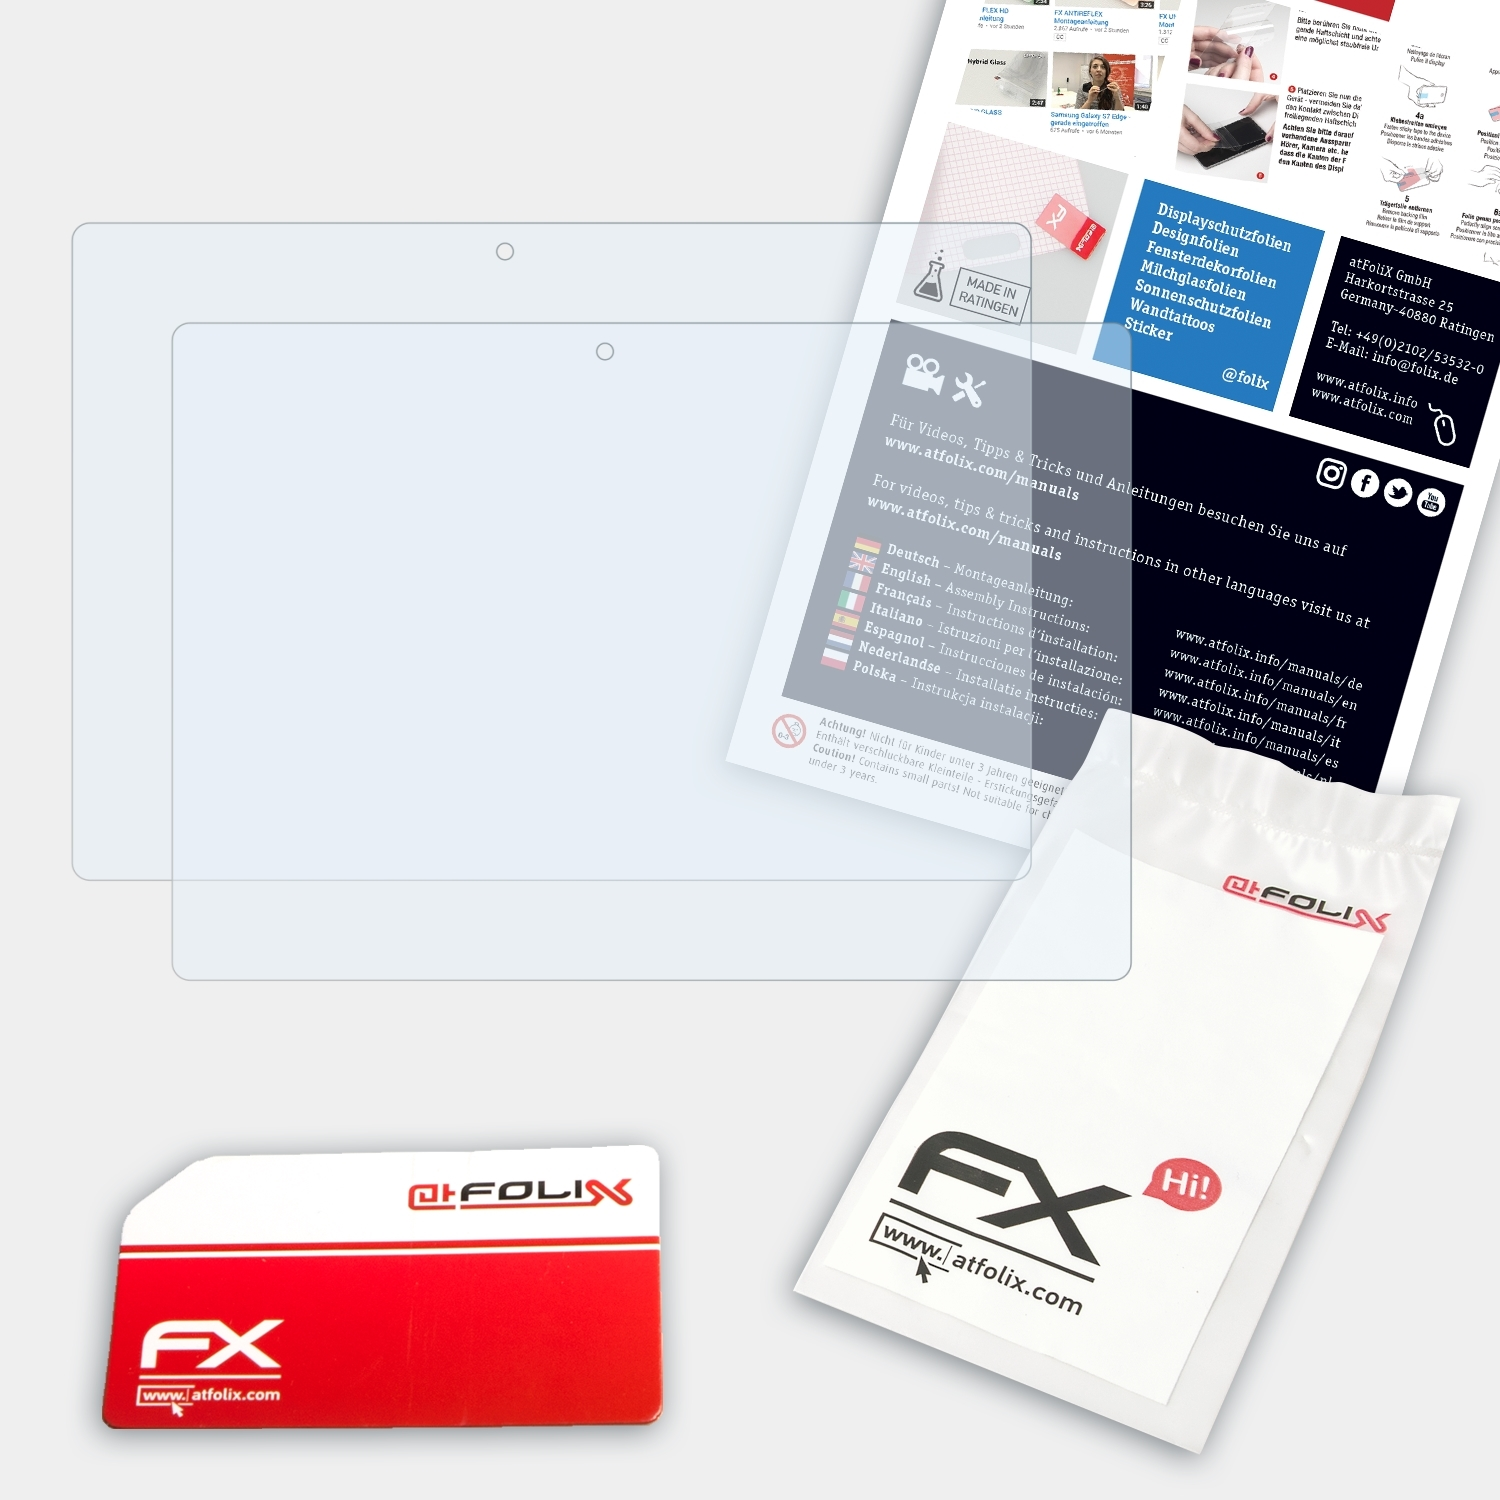 FX-Clear 2x ATFOLIX 10 Acer Tab Iconia (A3-A30)) Displayschutz(für